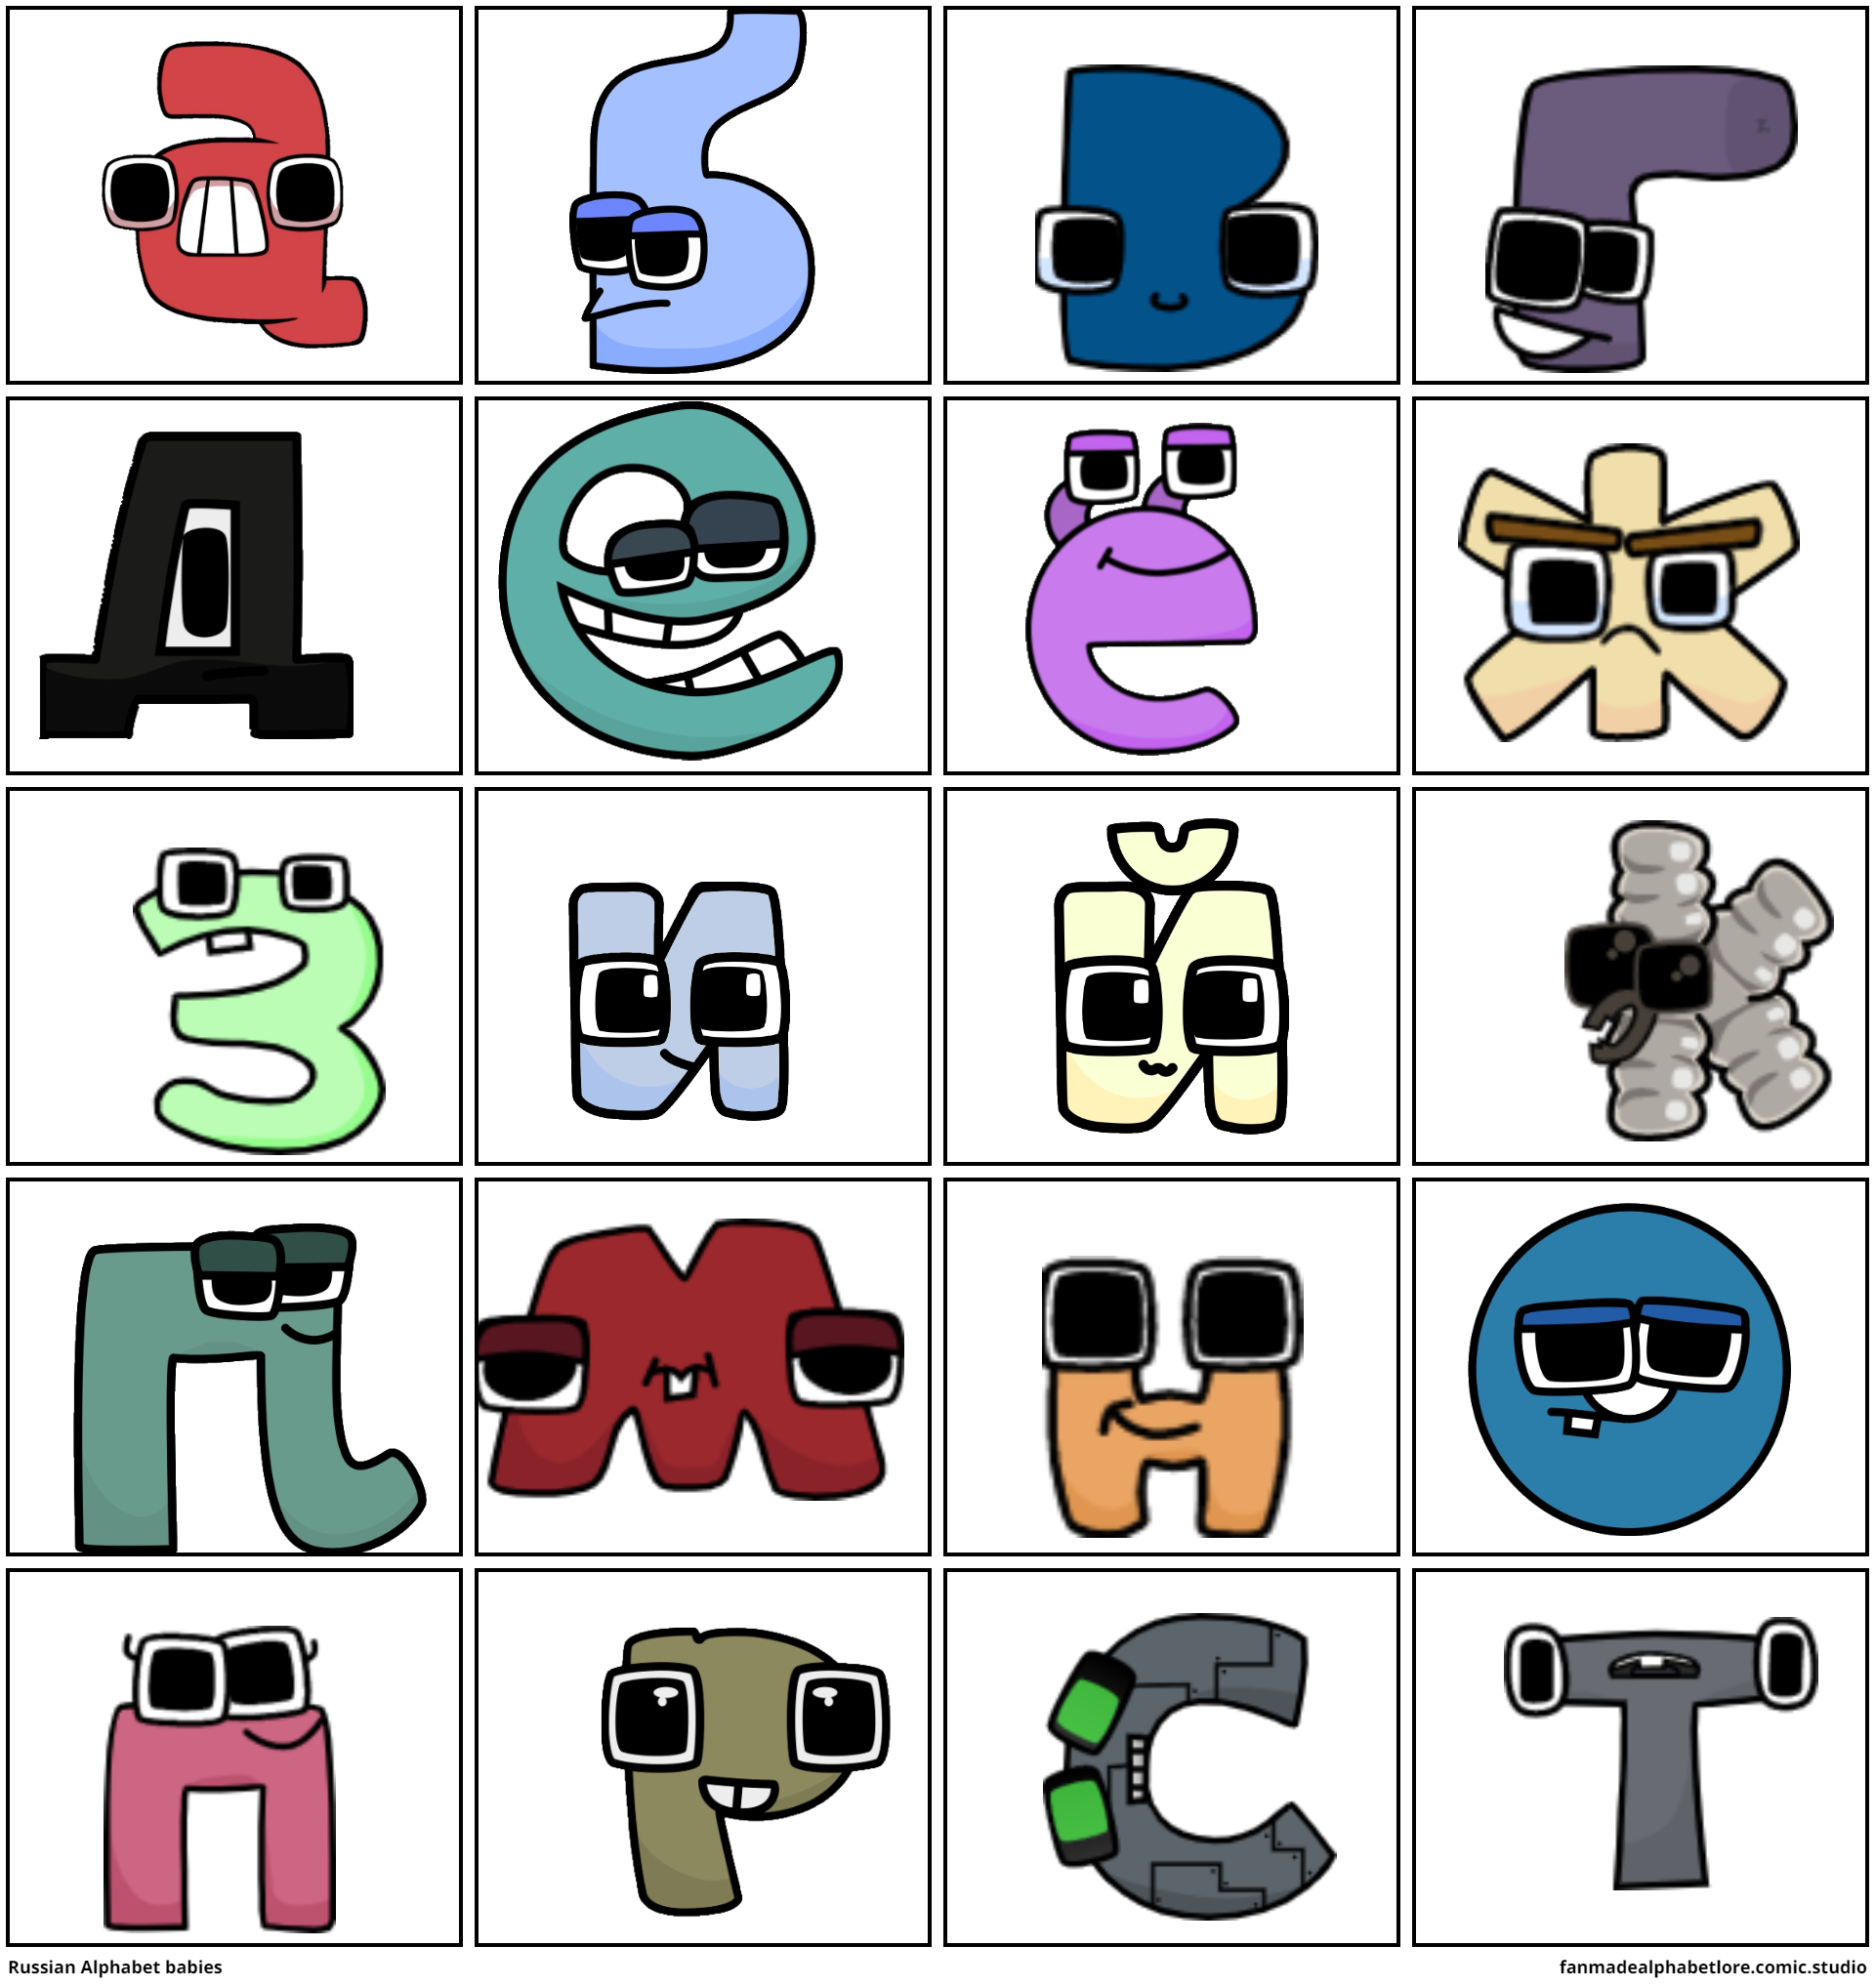 Baby Russian alphabet lore reloaded - Comic Studio